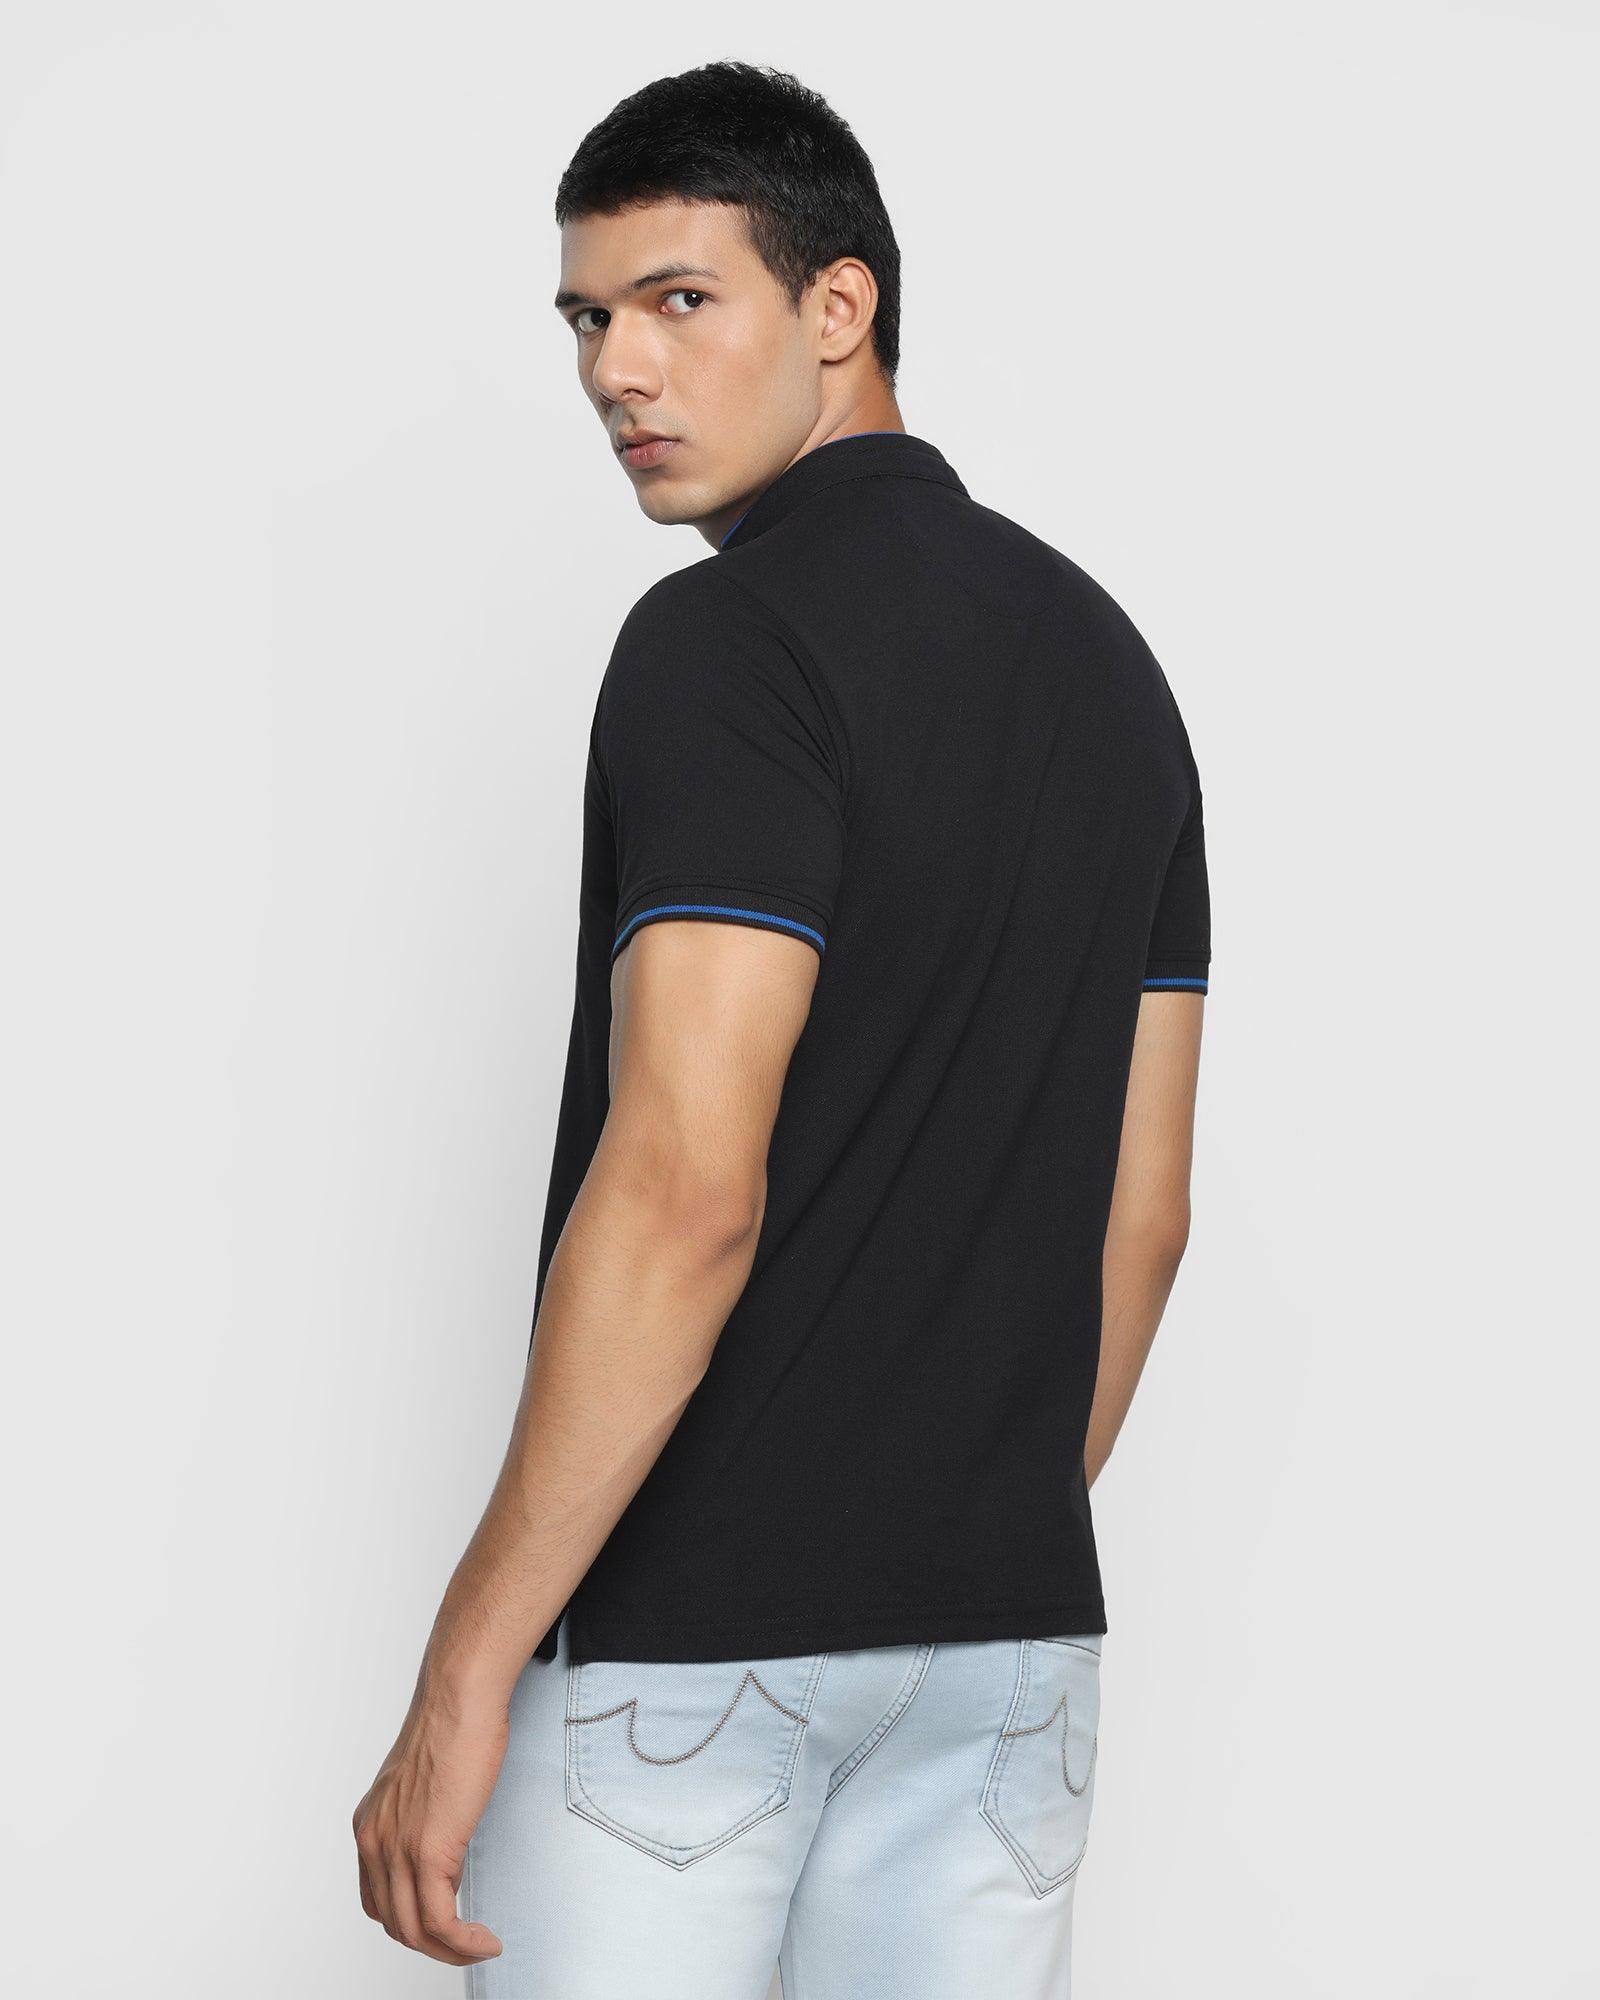 Mandarin Collar Black Solid T Shirt - Dom